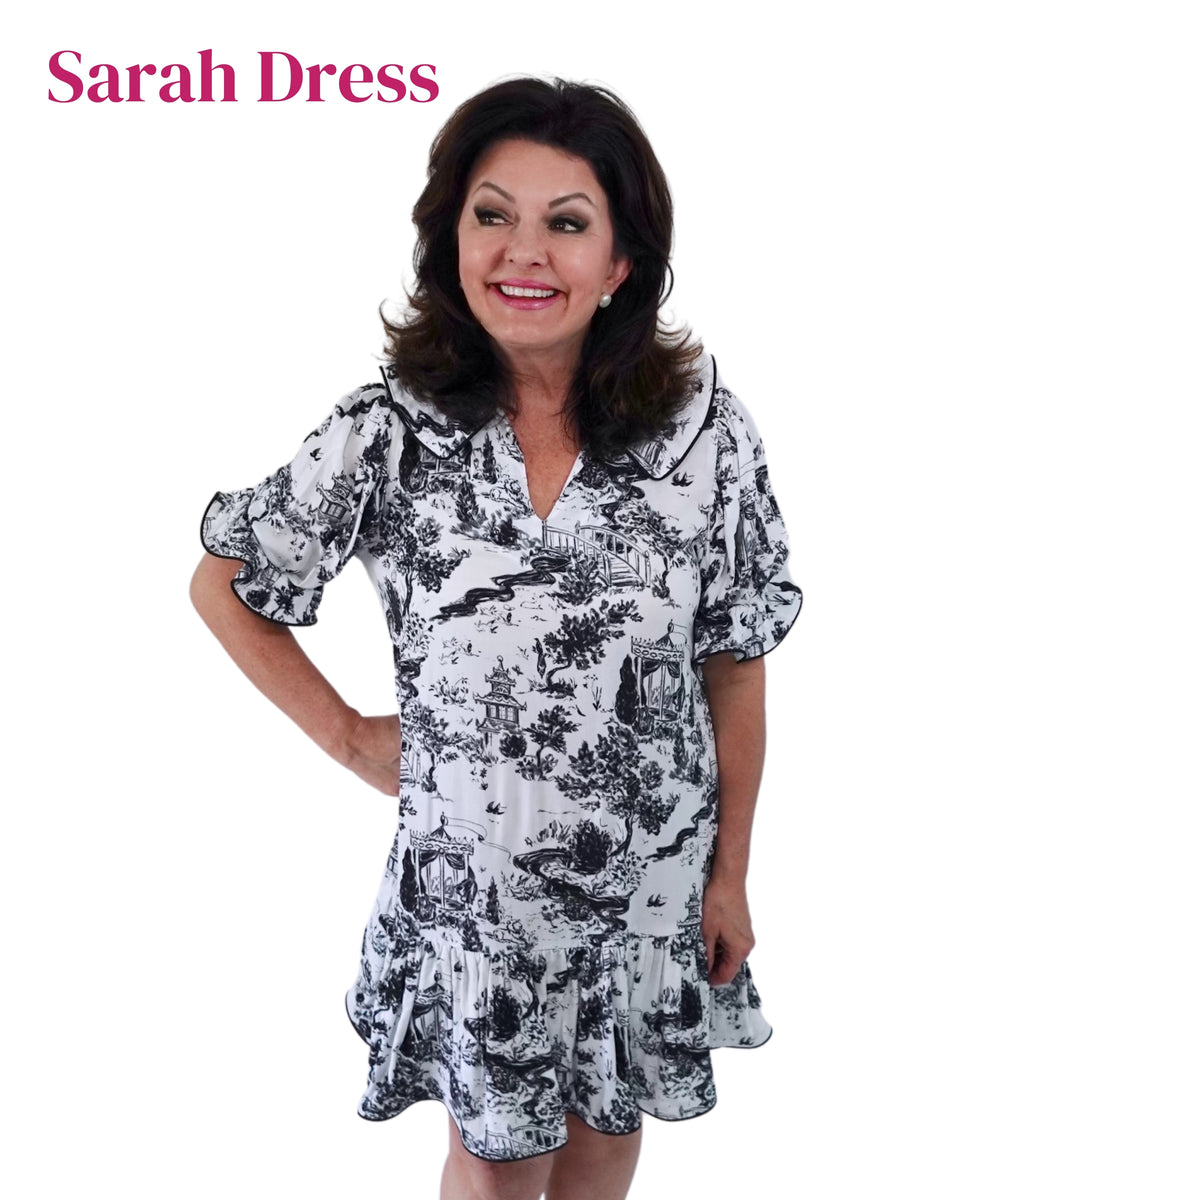 THE SARAH DRESS IN BLACK